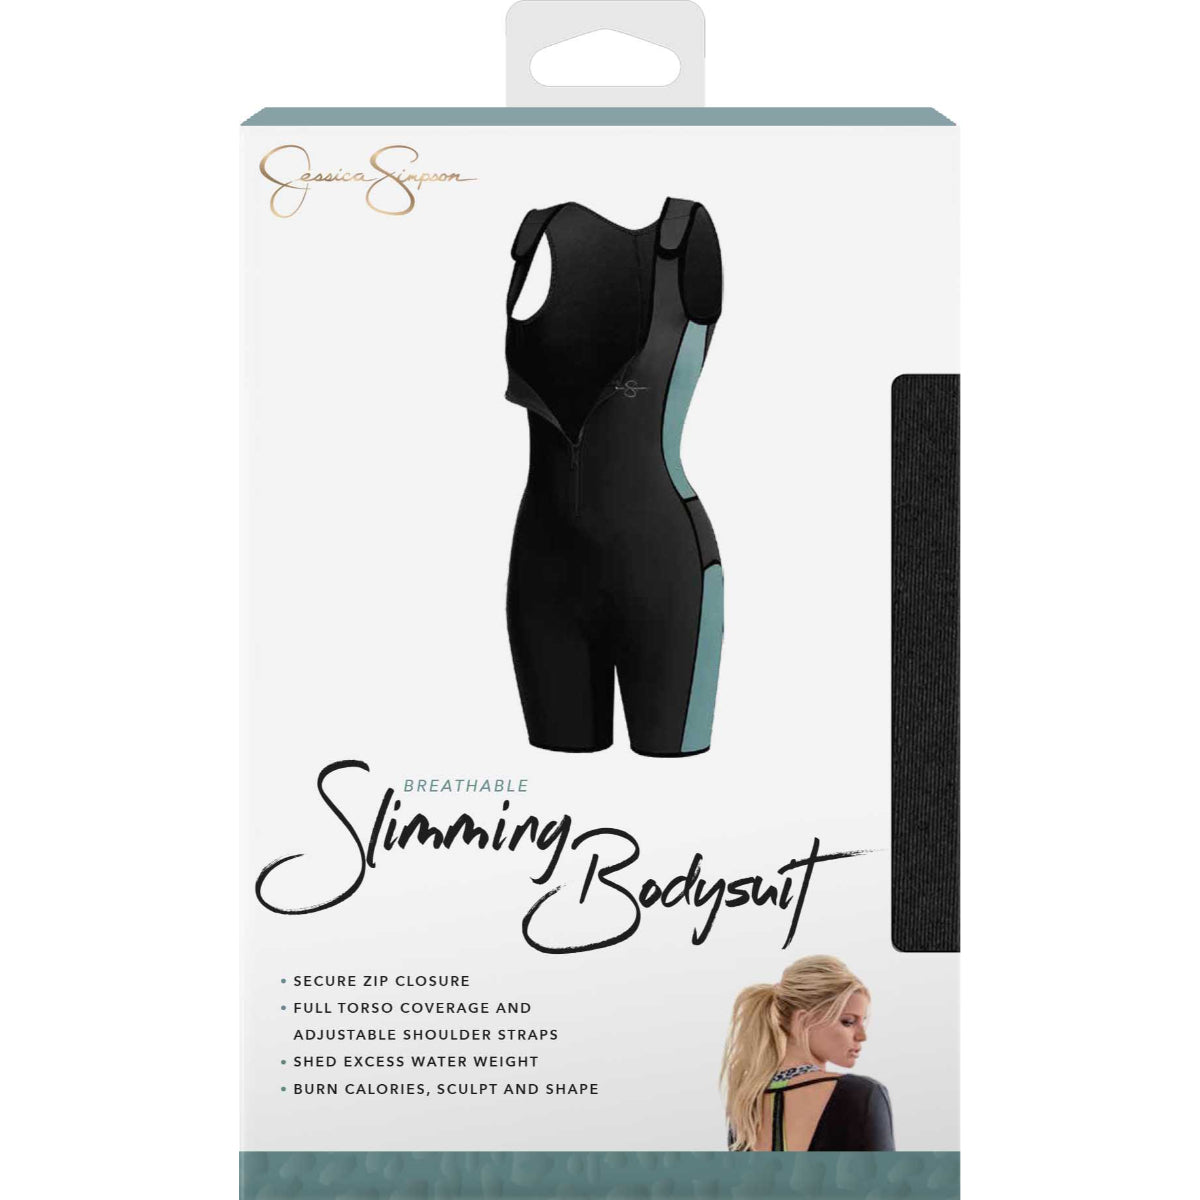 Jessica Simpson Slimming Bodysuit, for Weight Loss – Motiv Fitness